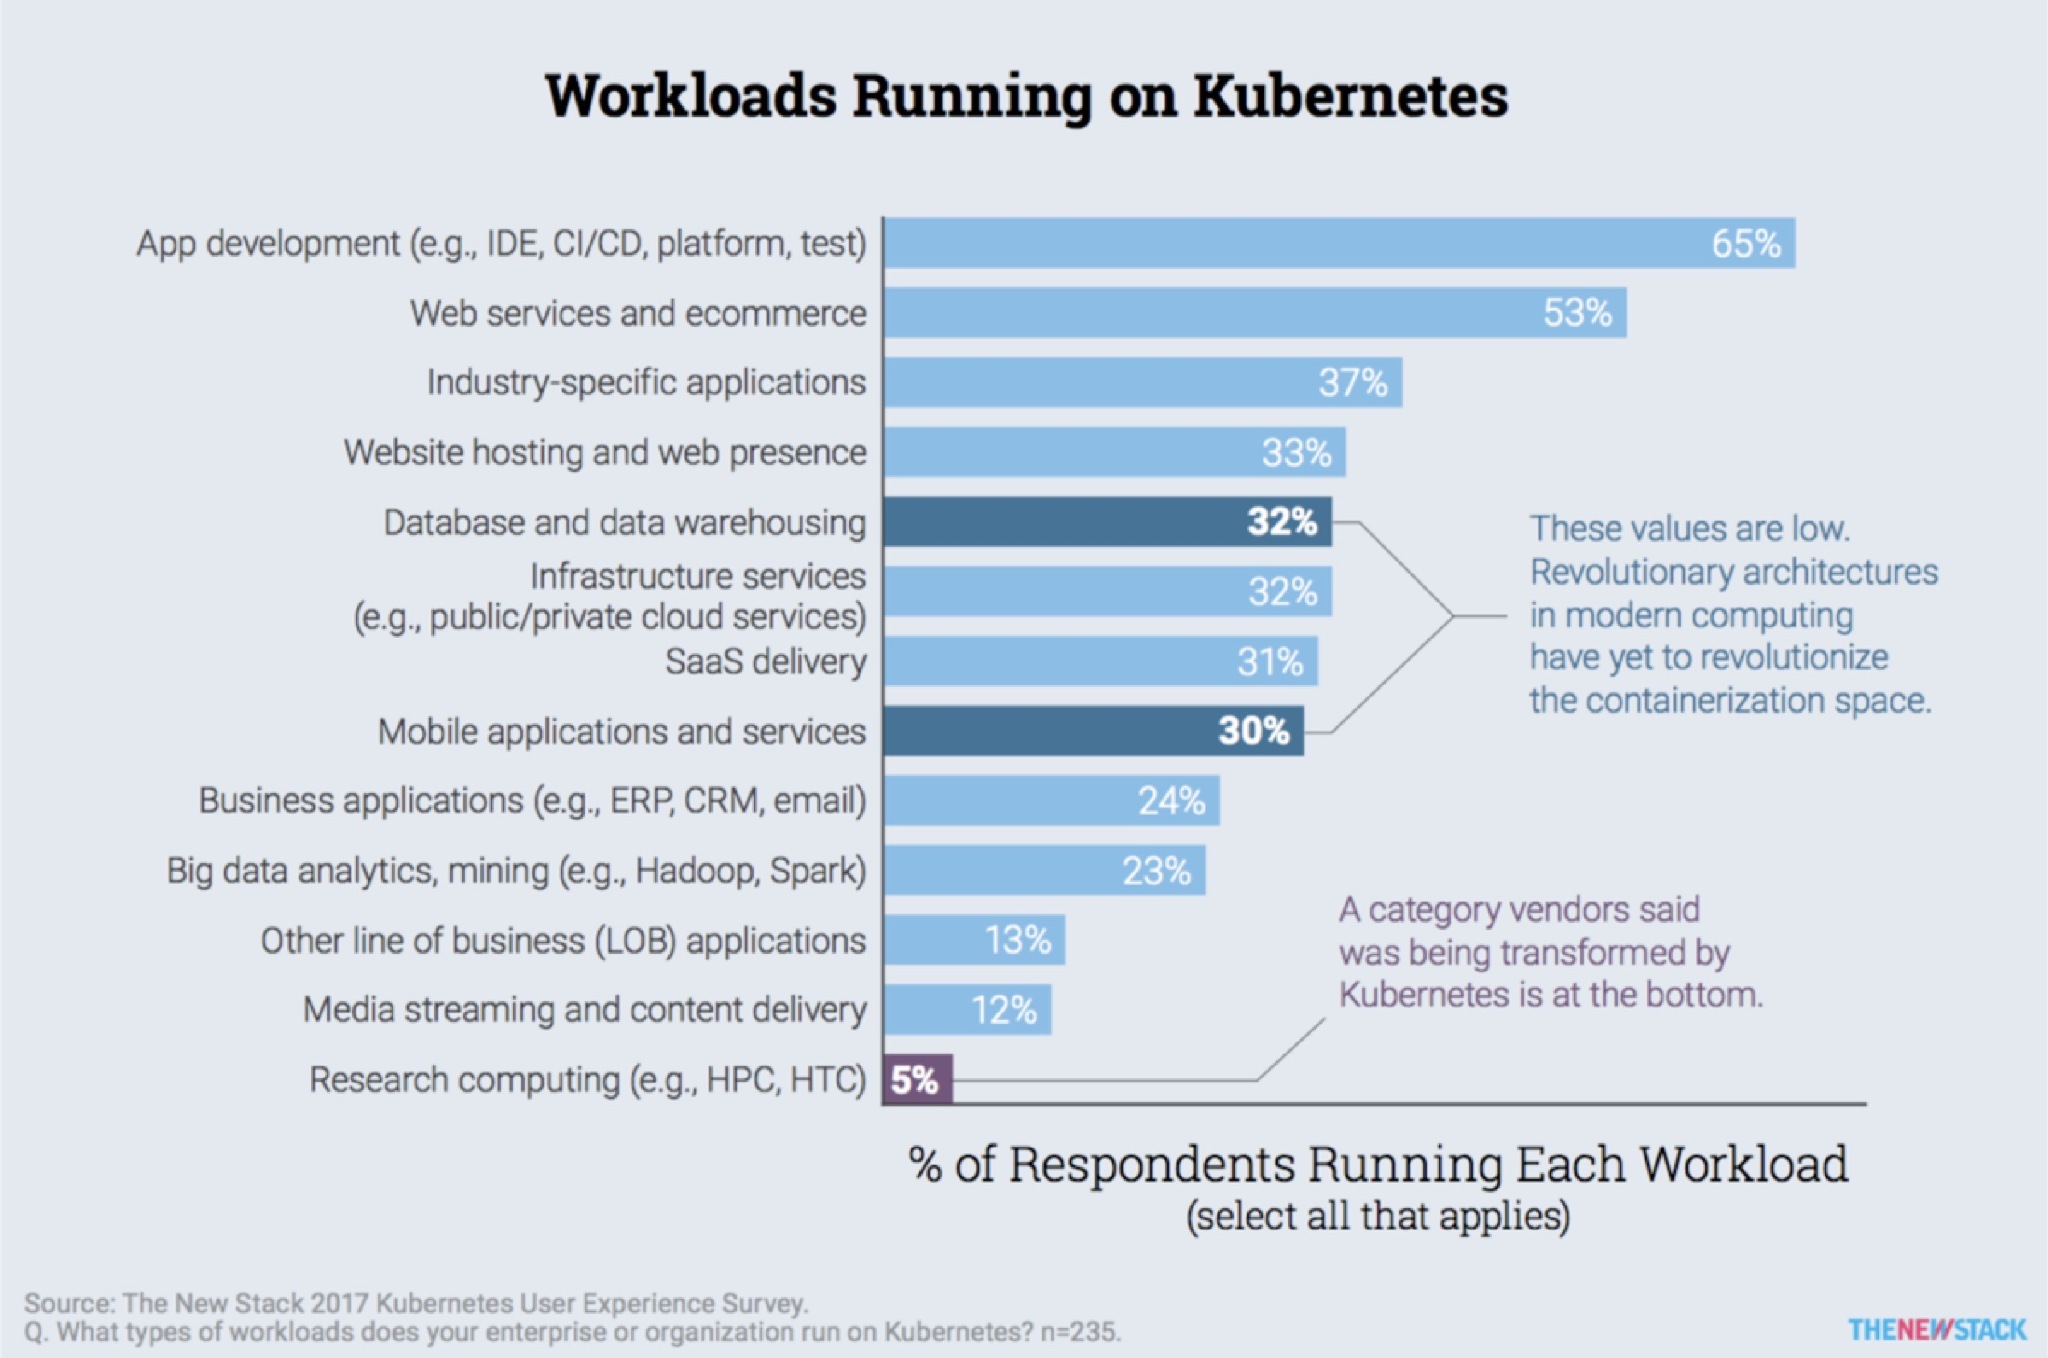 Workloads running on Kubernetes